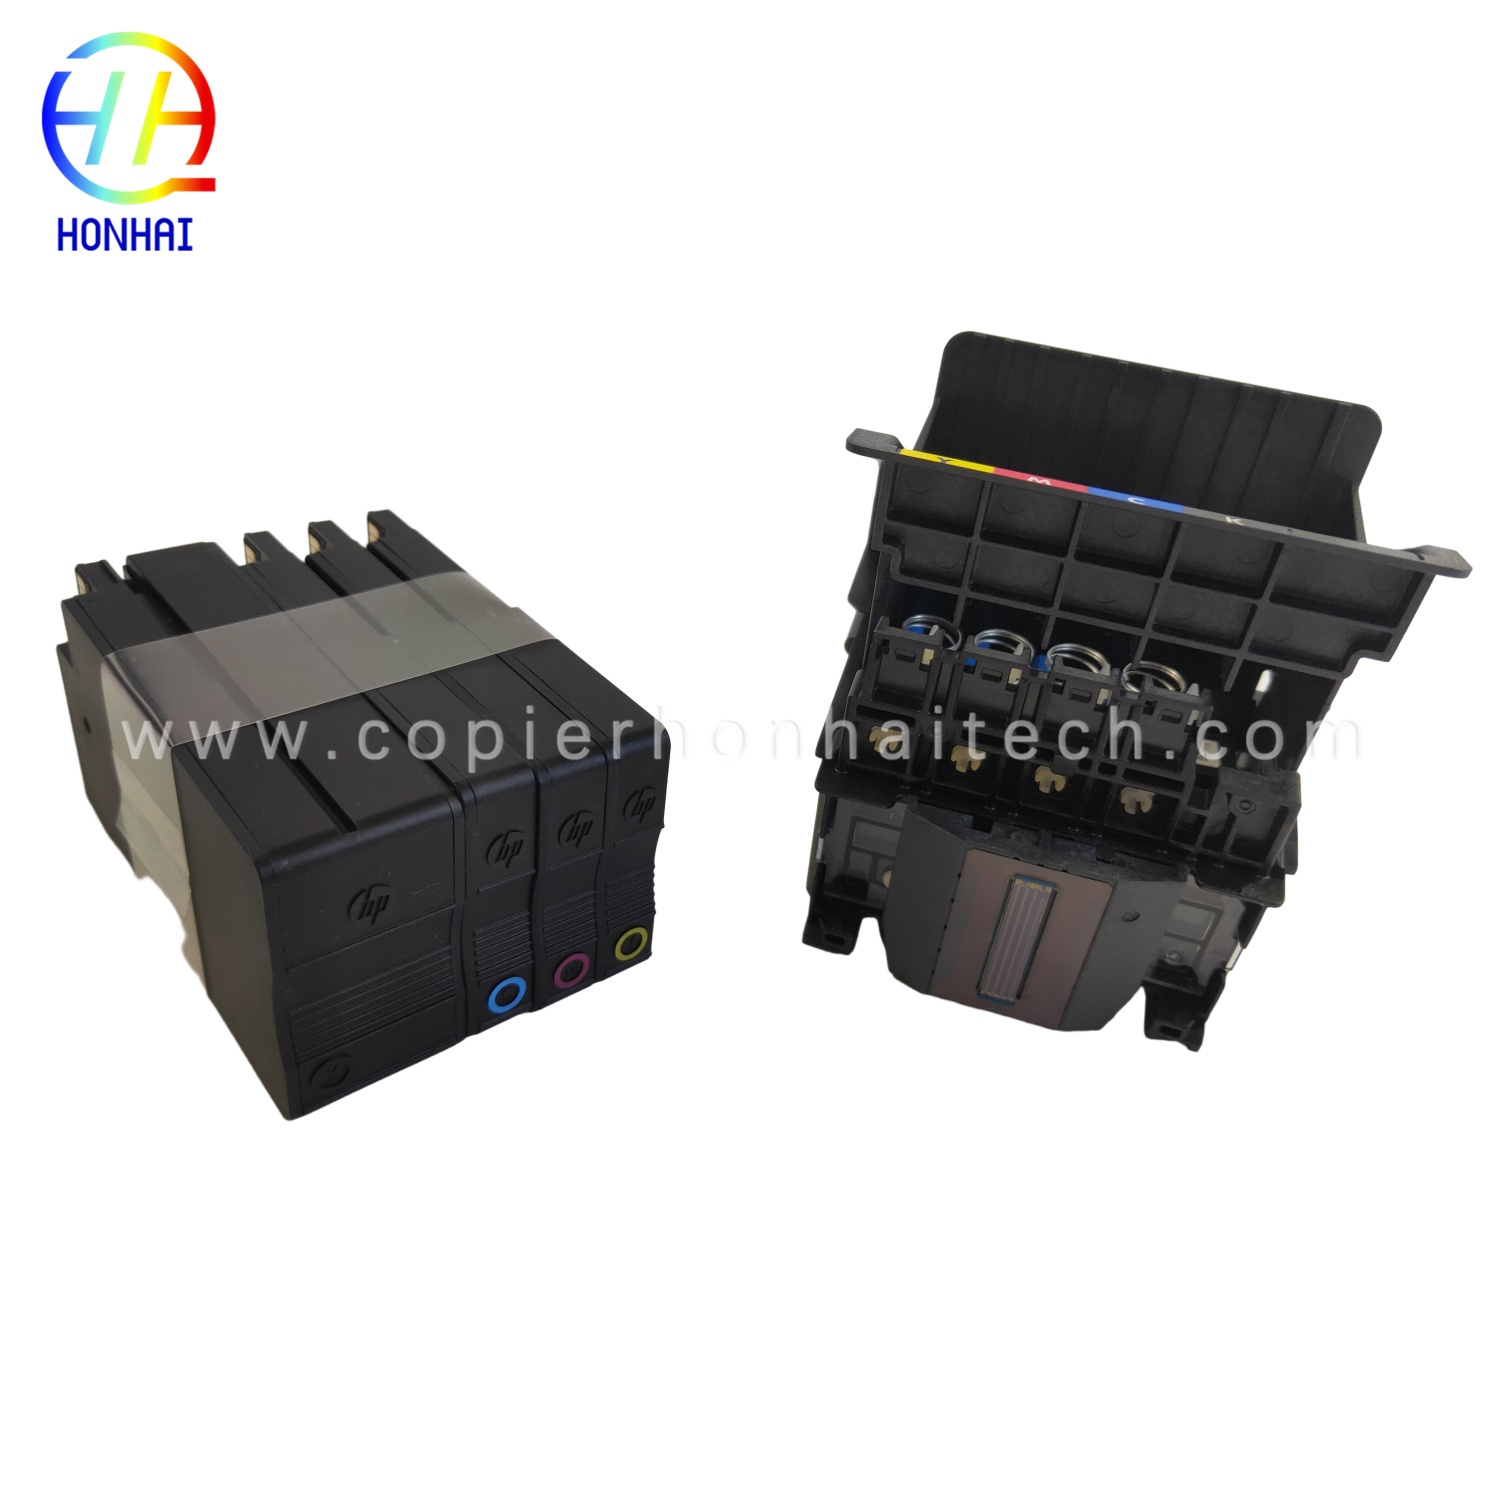 https://www.copierhonhaitech.com/origen-new-gd-c1q10a-elp-garuda-printing-head-eplacement-kit-for-hp-designjet-t120-t125-t130-t520-t525-t530-product/